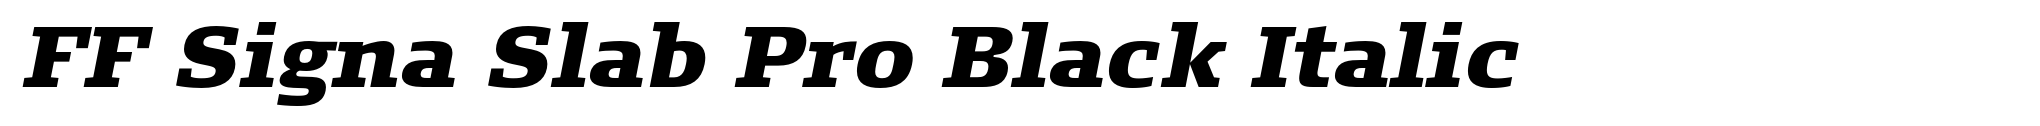 FF Signa Slab Pro Black Italic image